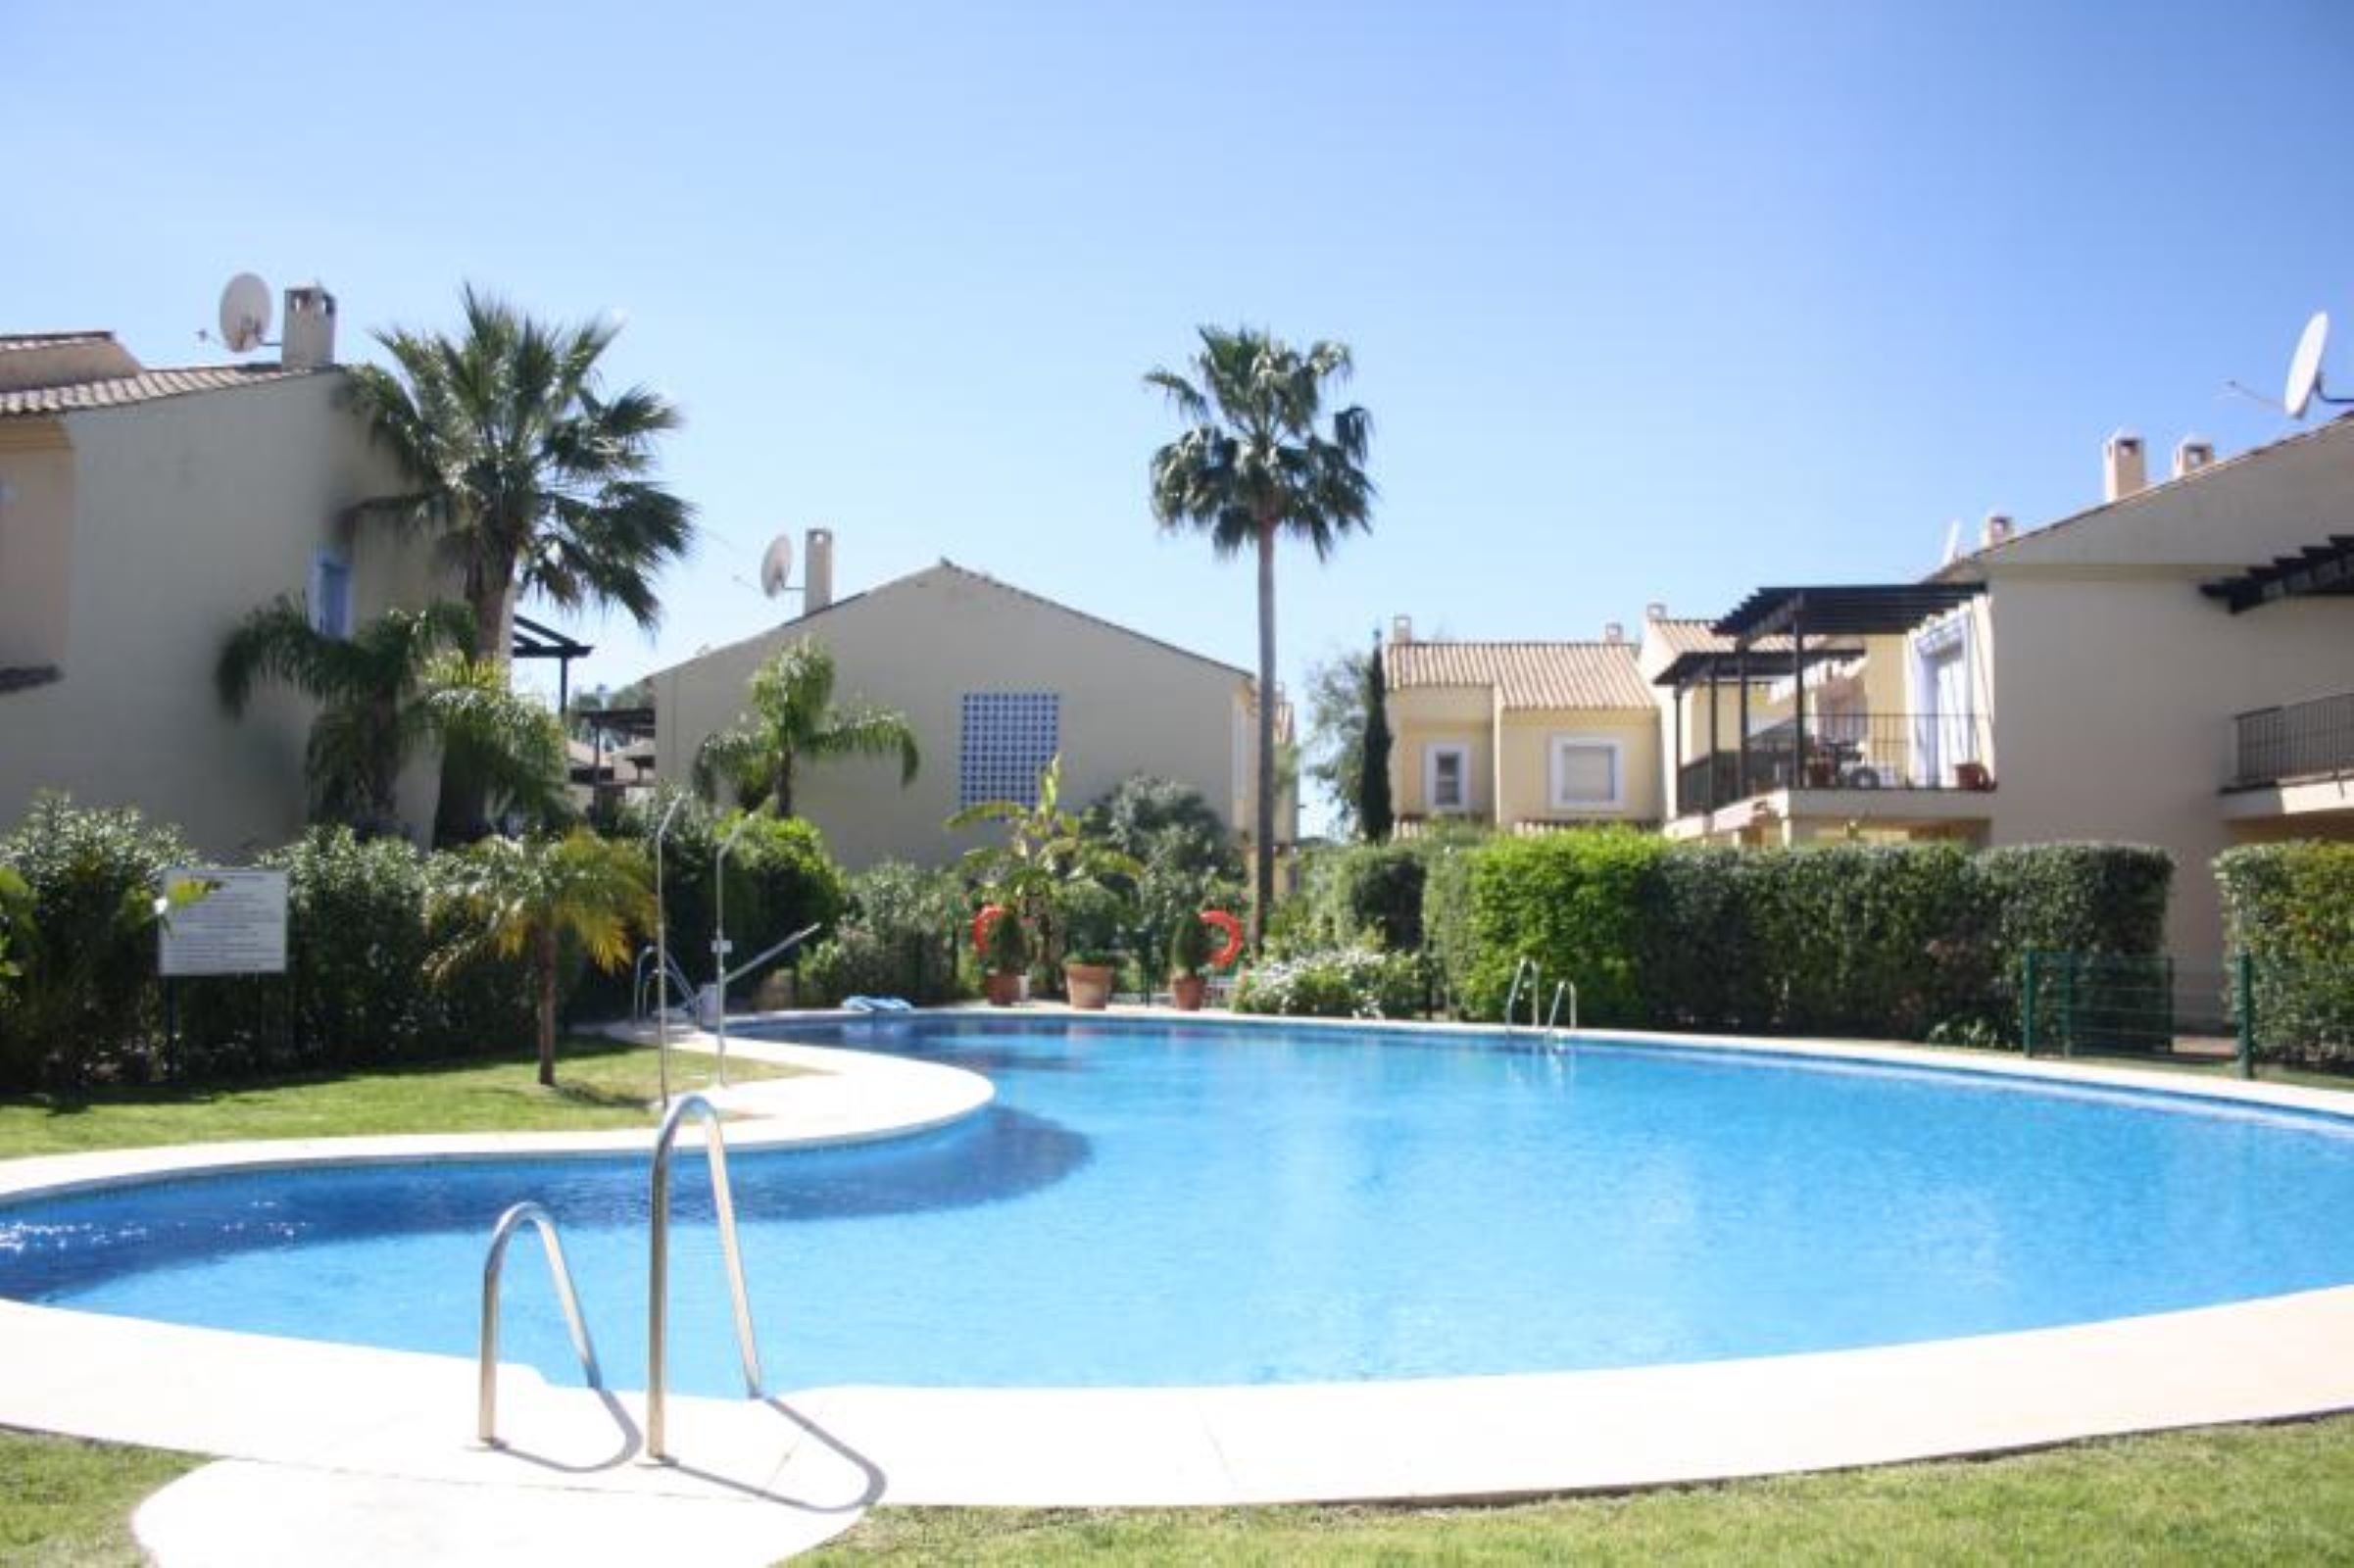 Single family semi detached to rent at Nueva Andalucía, Marbella | fotocasa